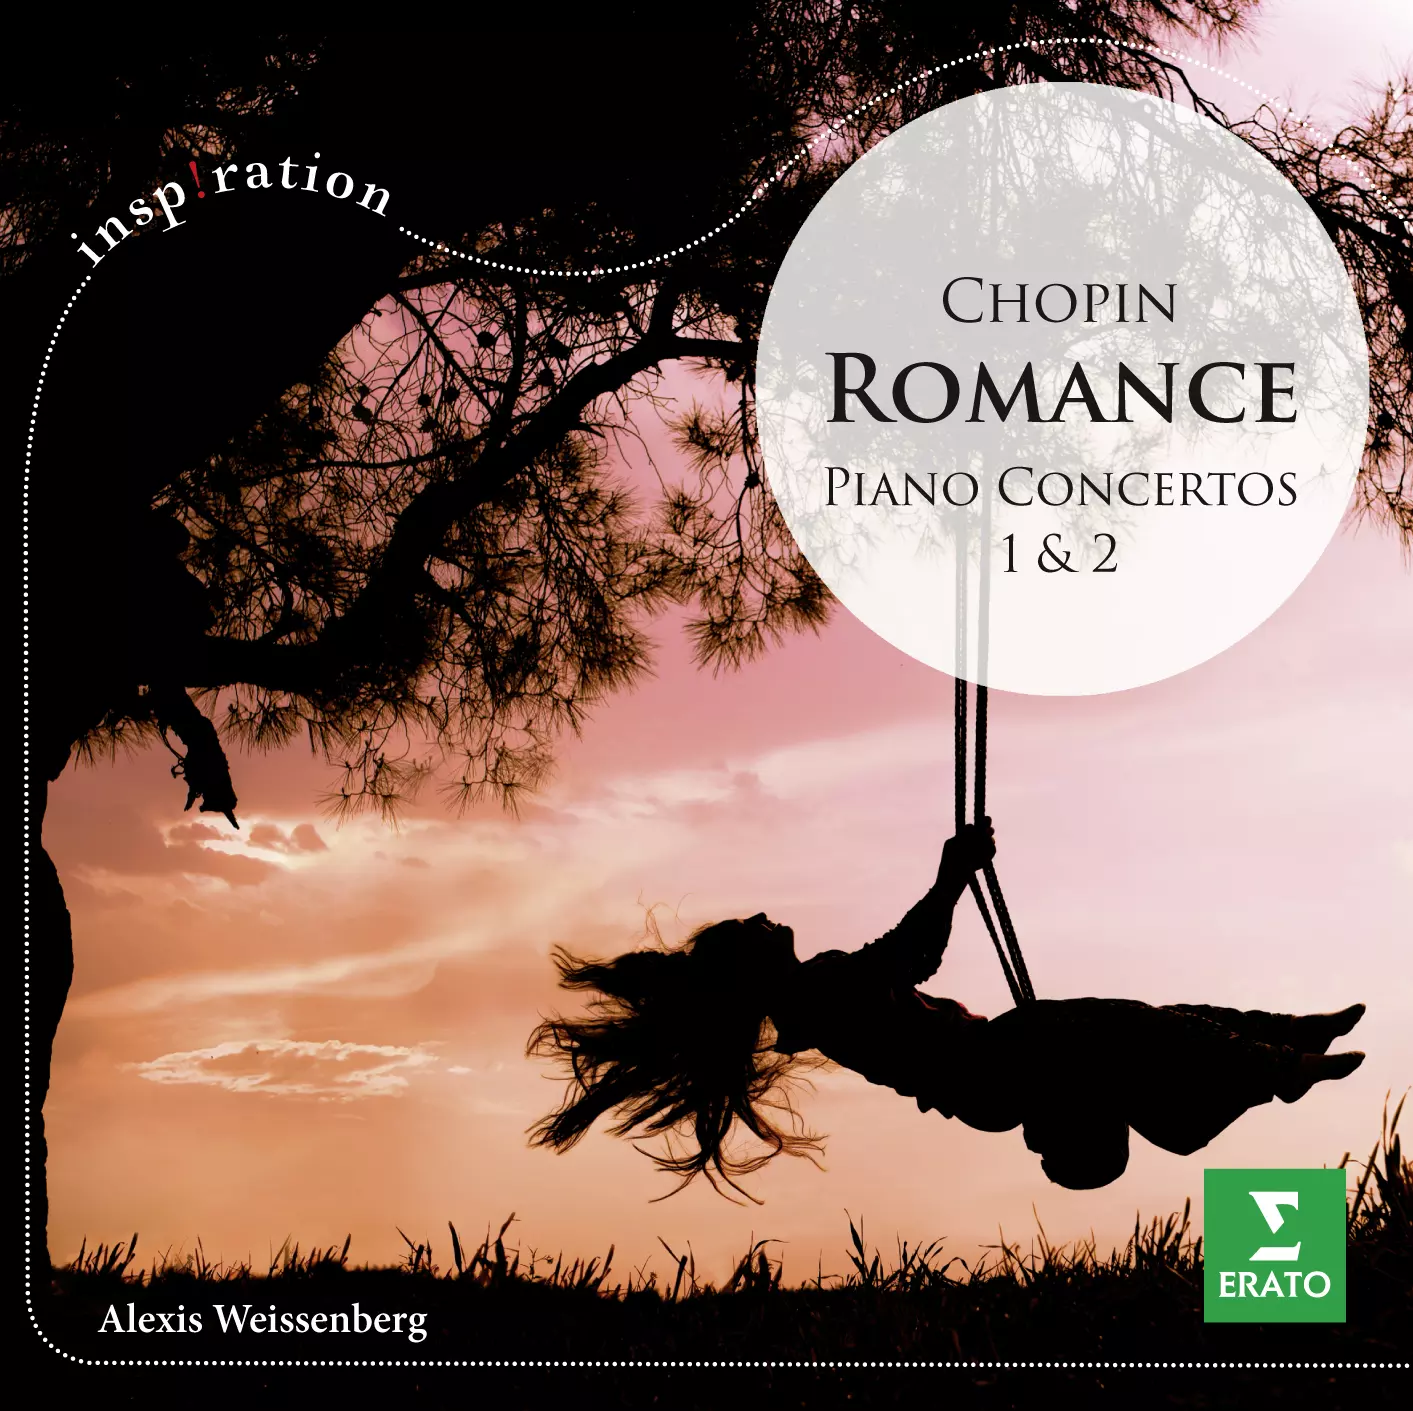 Chopin: Romance - Piano Concerto 1 & 2 (Inspiration)